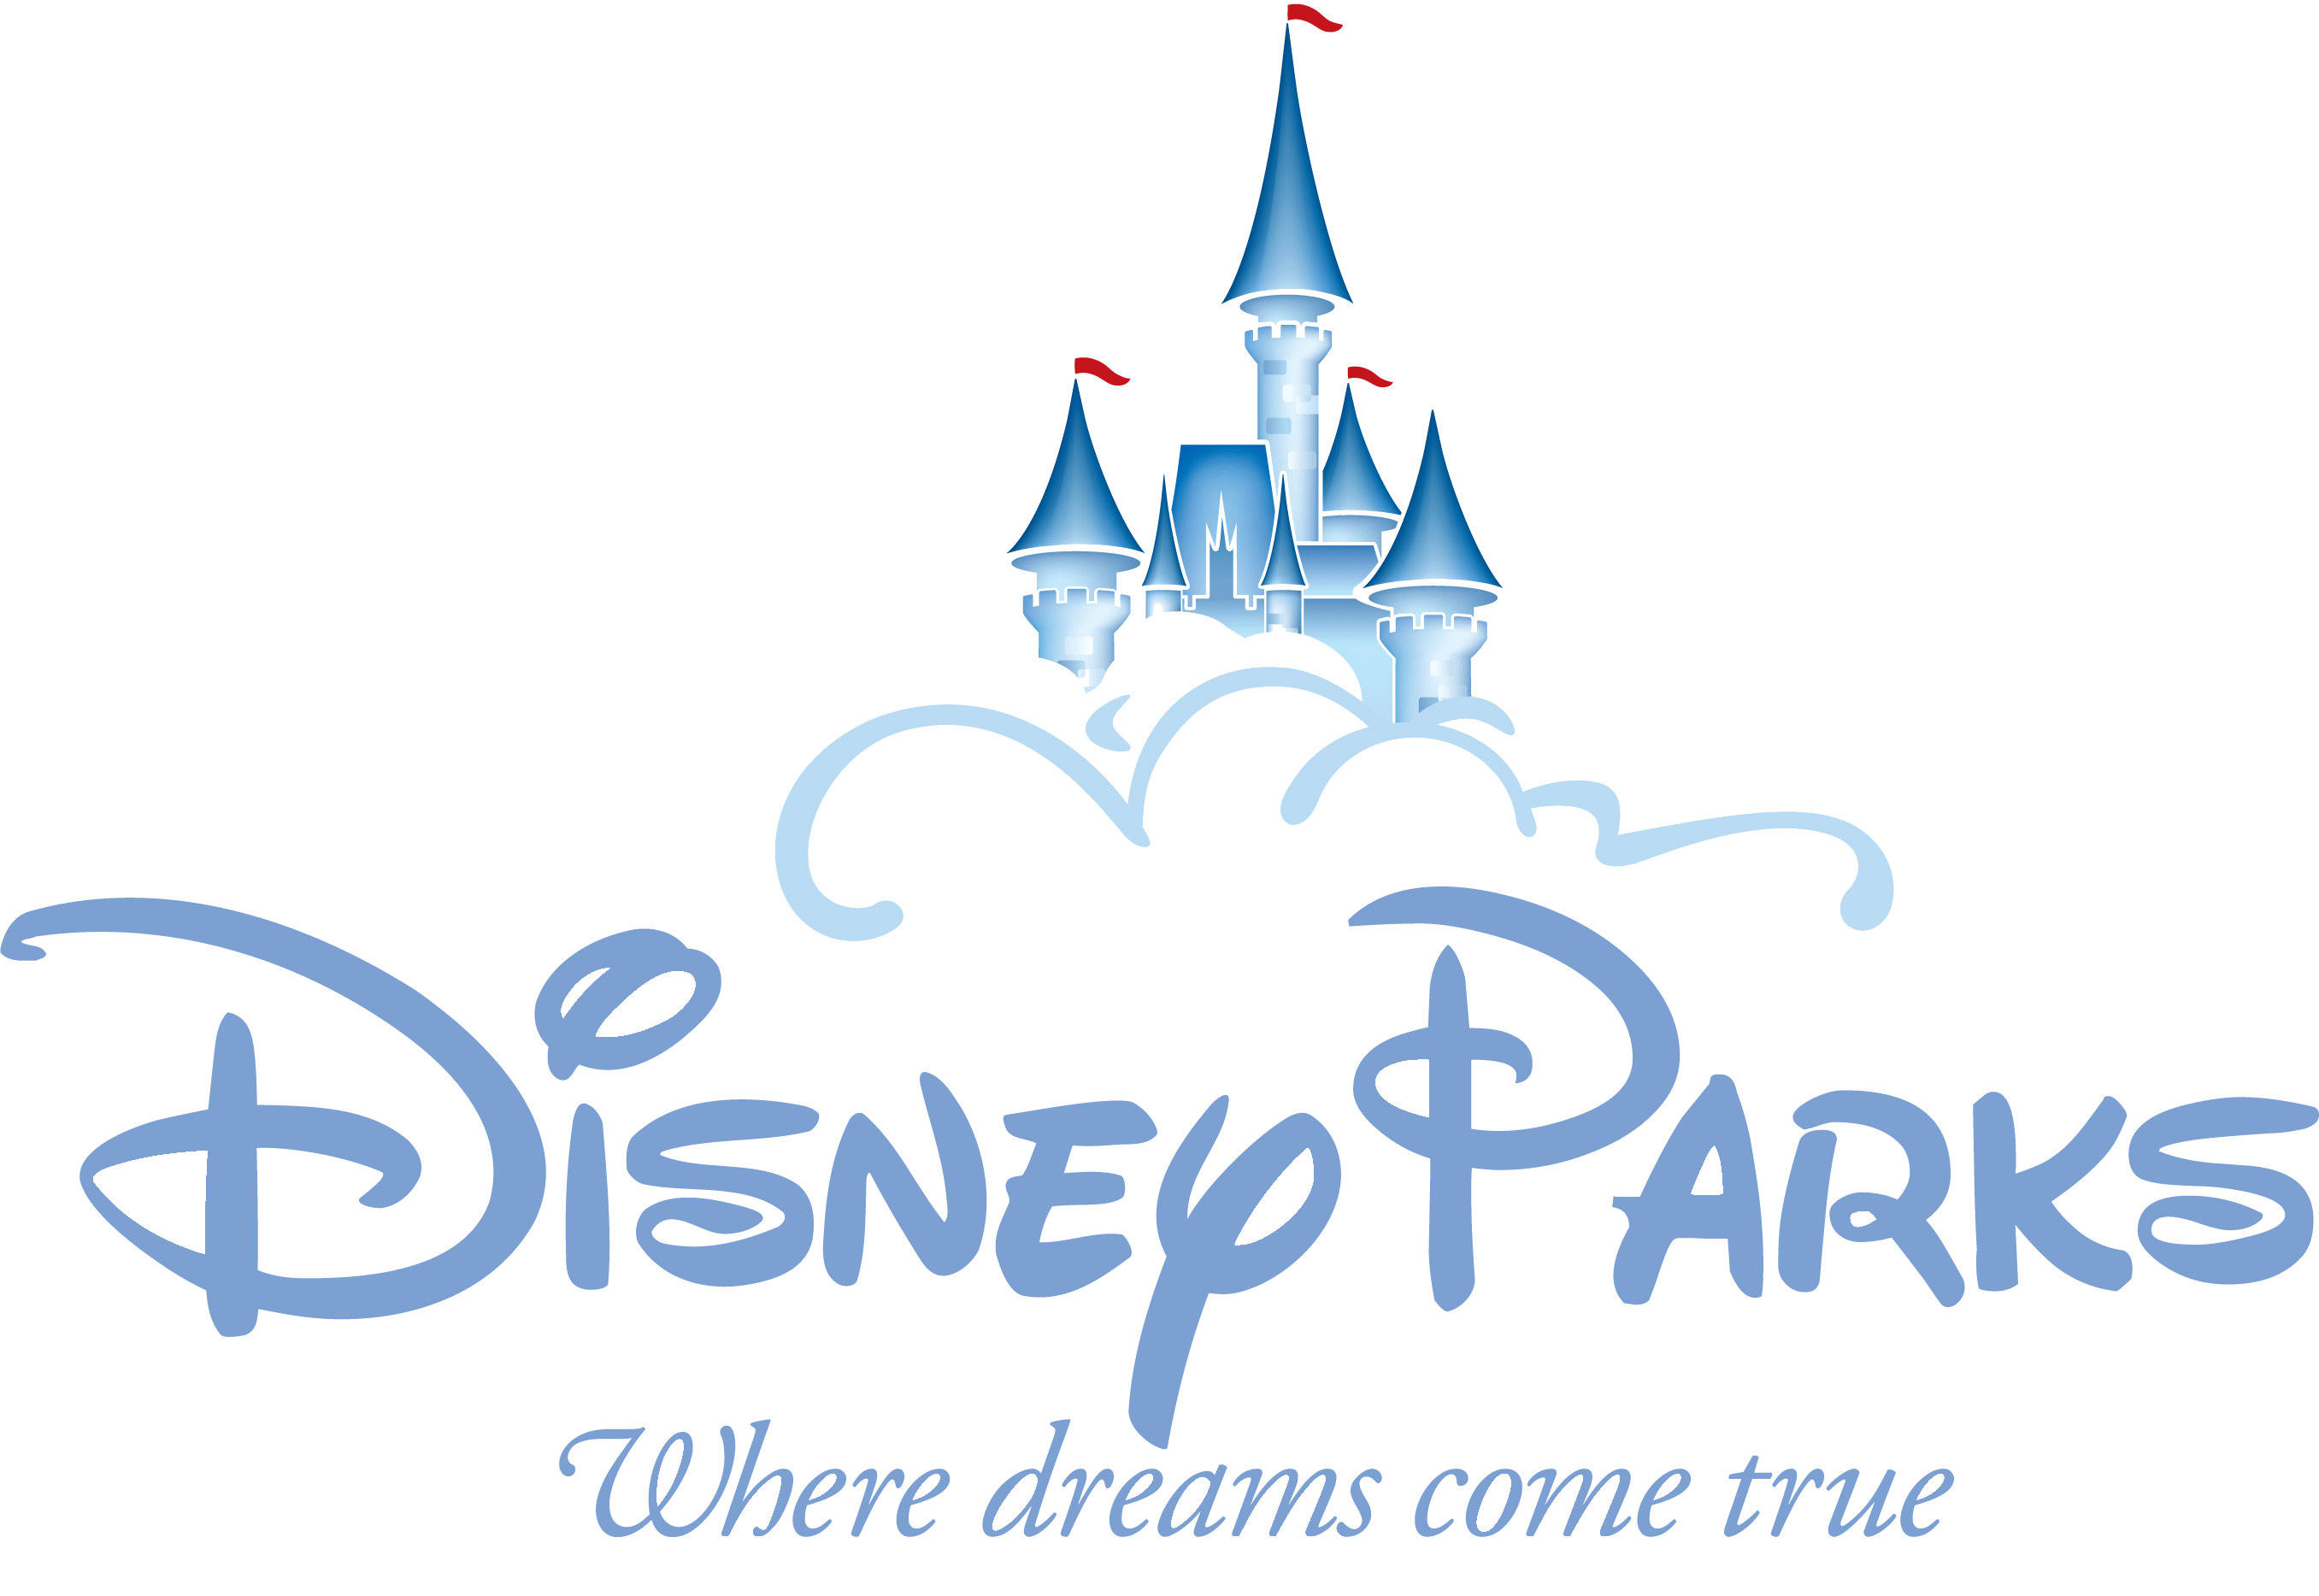 Disney clipart disney land. Parks announces new executives